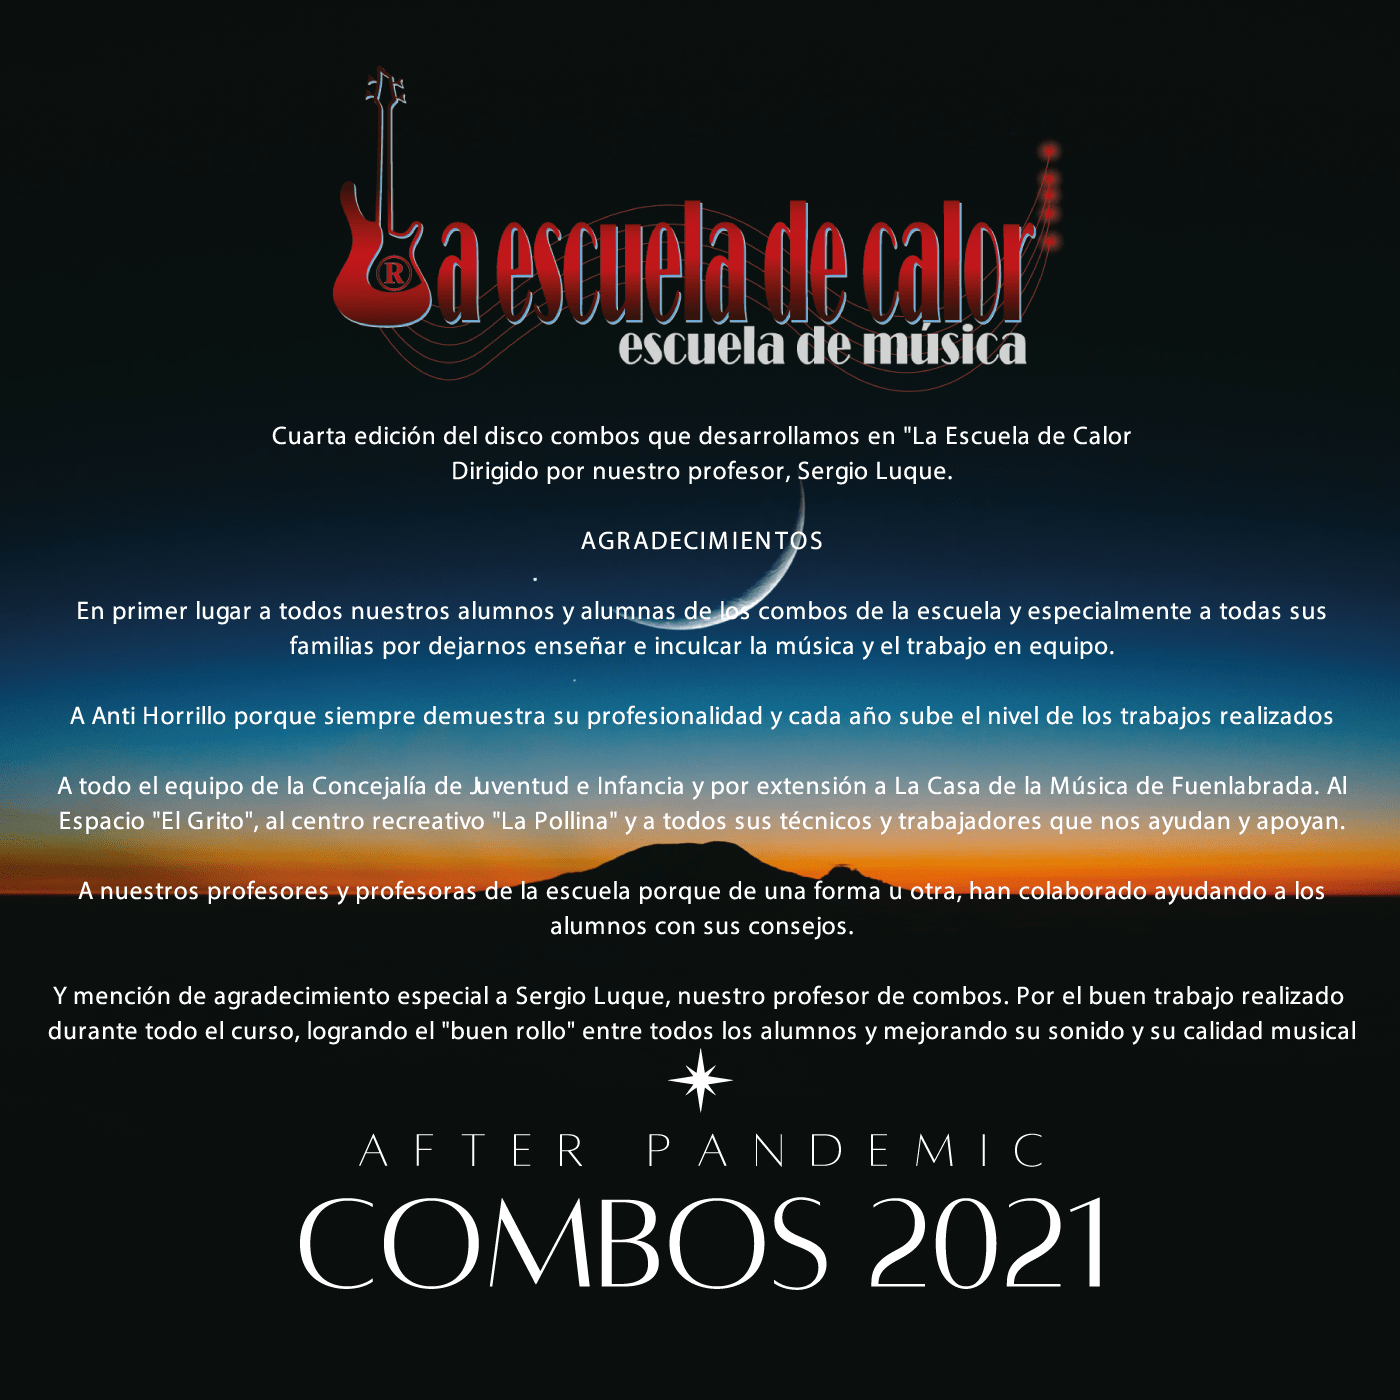 Libreto disco Combos 2019 "After Pandemic" página 10 contraportada